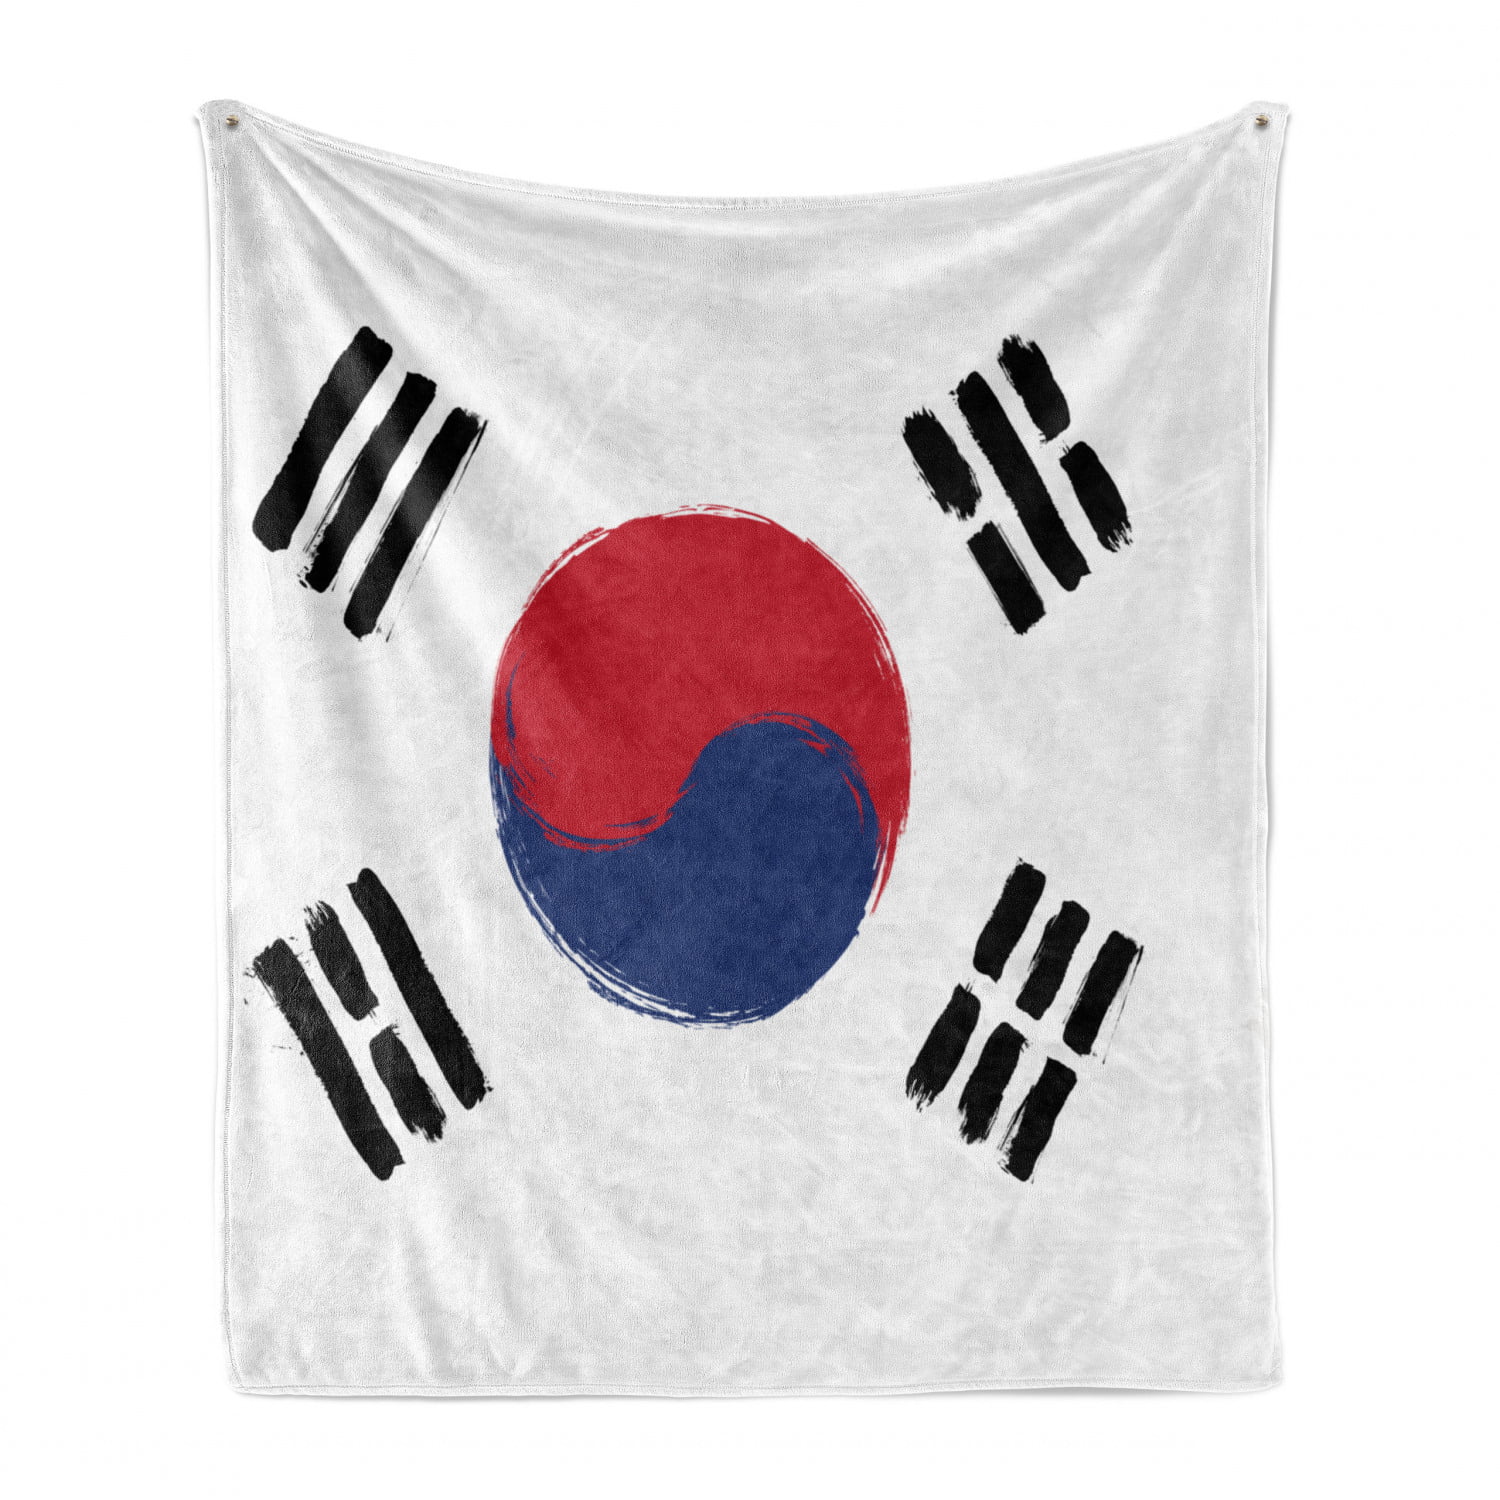 KOREA SOUTH  FLAG FLEECE THROW BLANKET   50" x 60" NEW LOWER PRICE FREE SHIP 